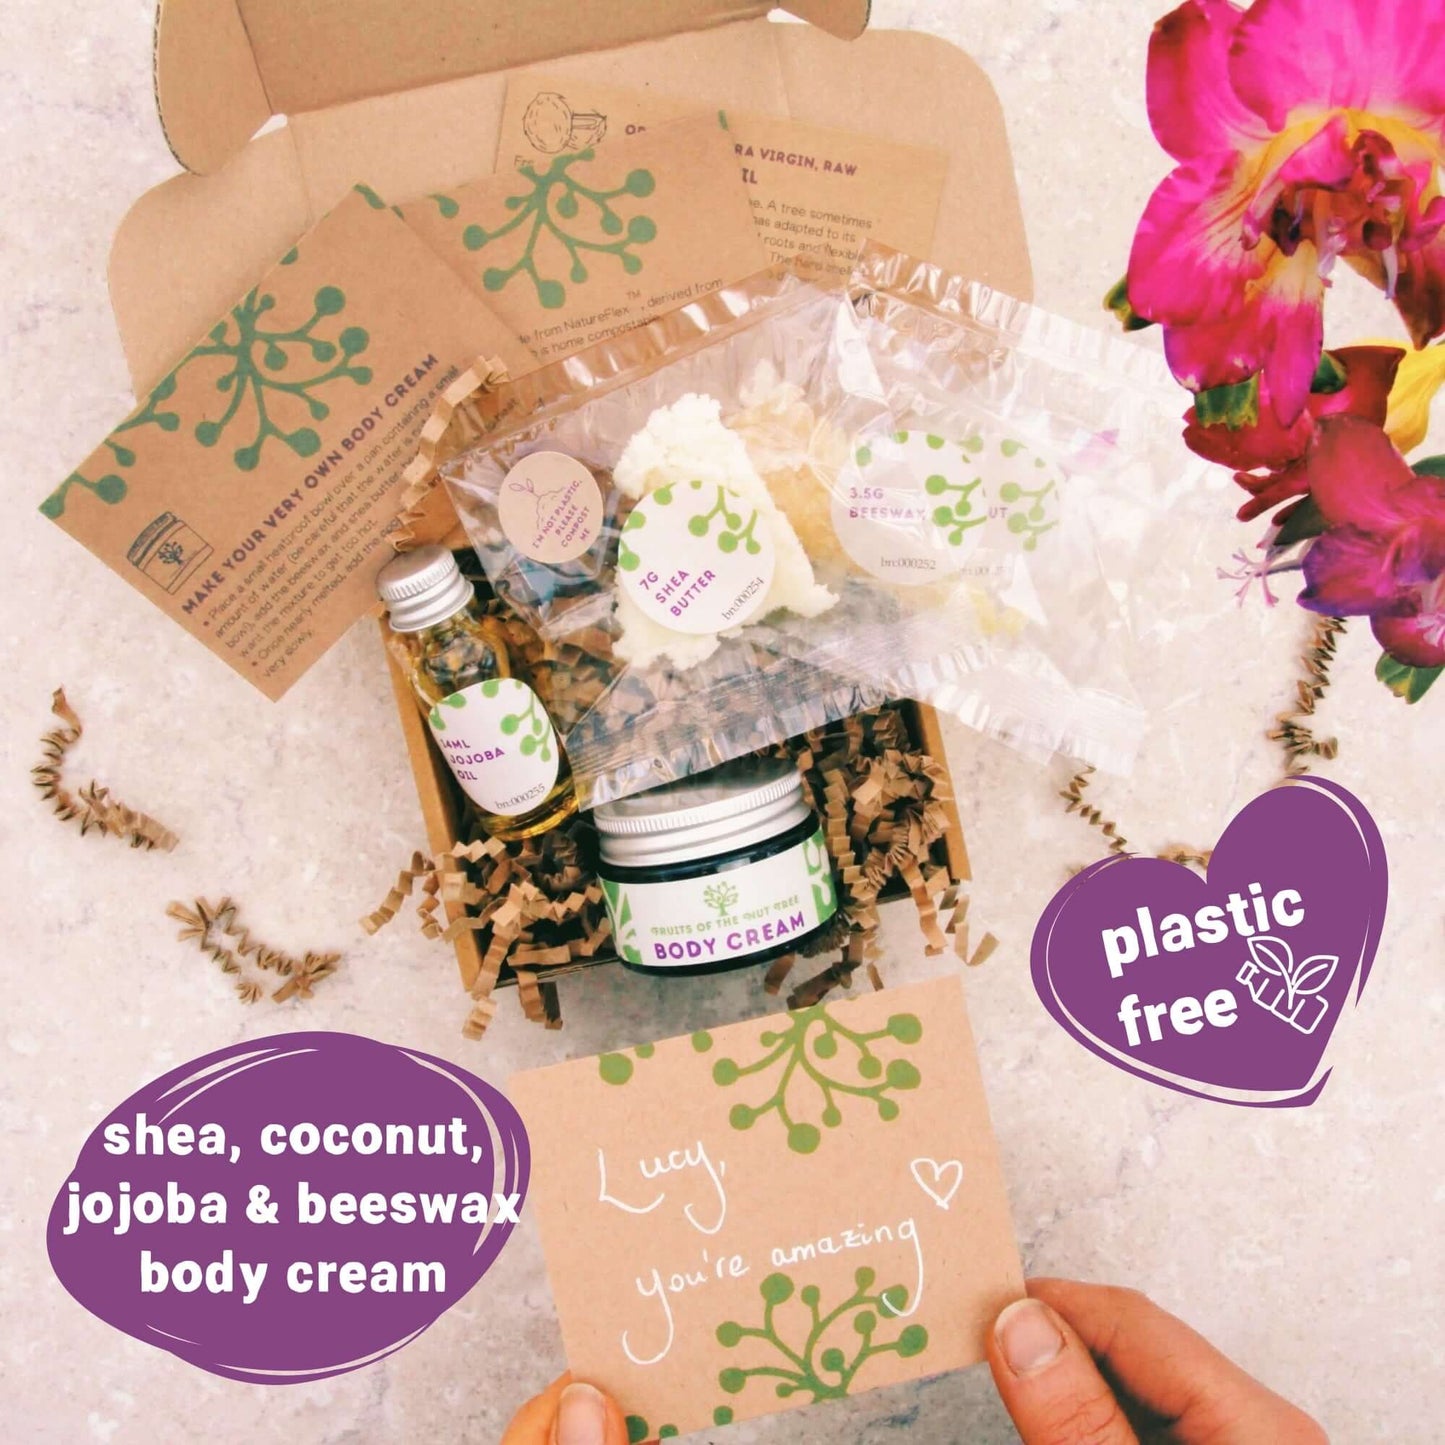 organic ingredients to make natural skincare inside birthday gift box